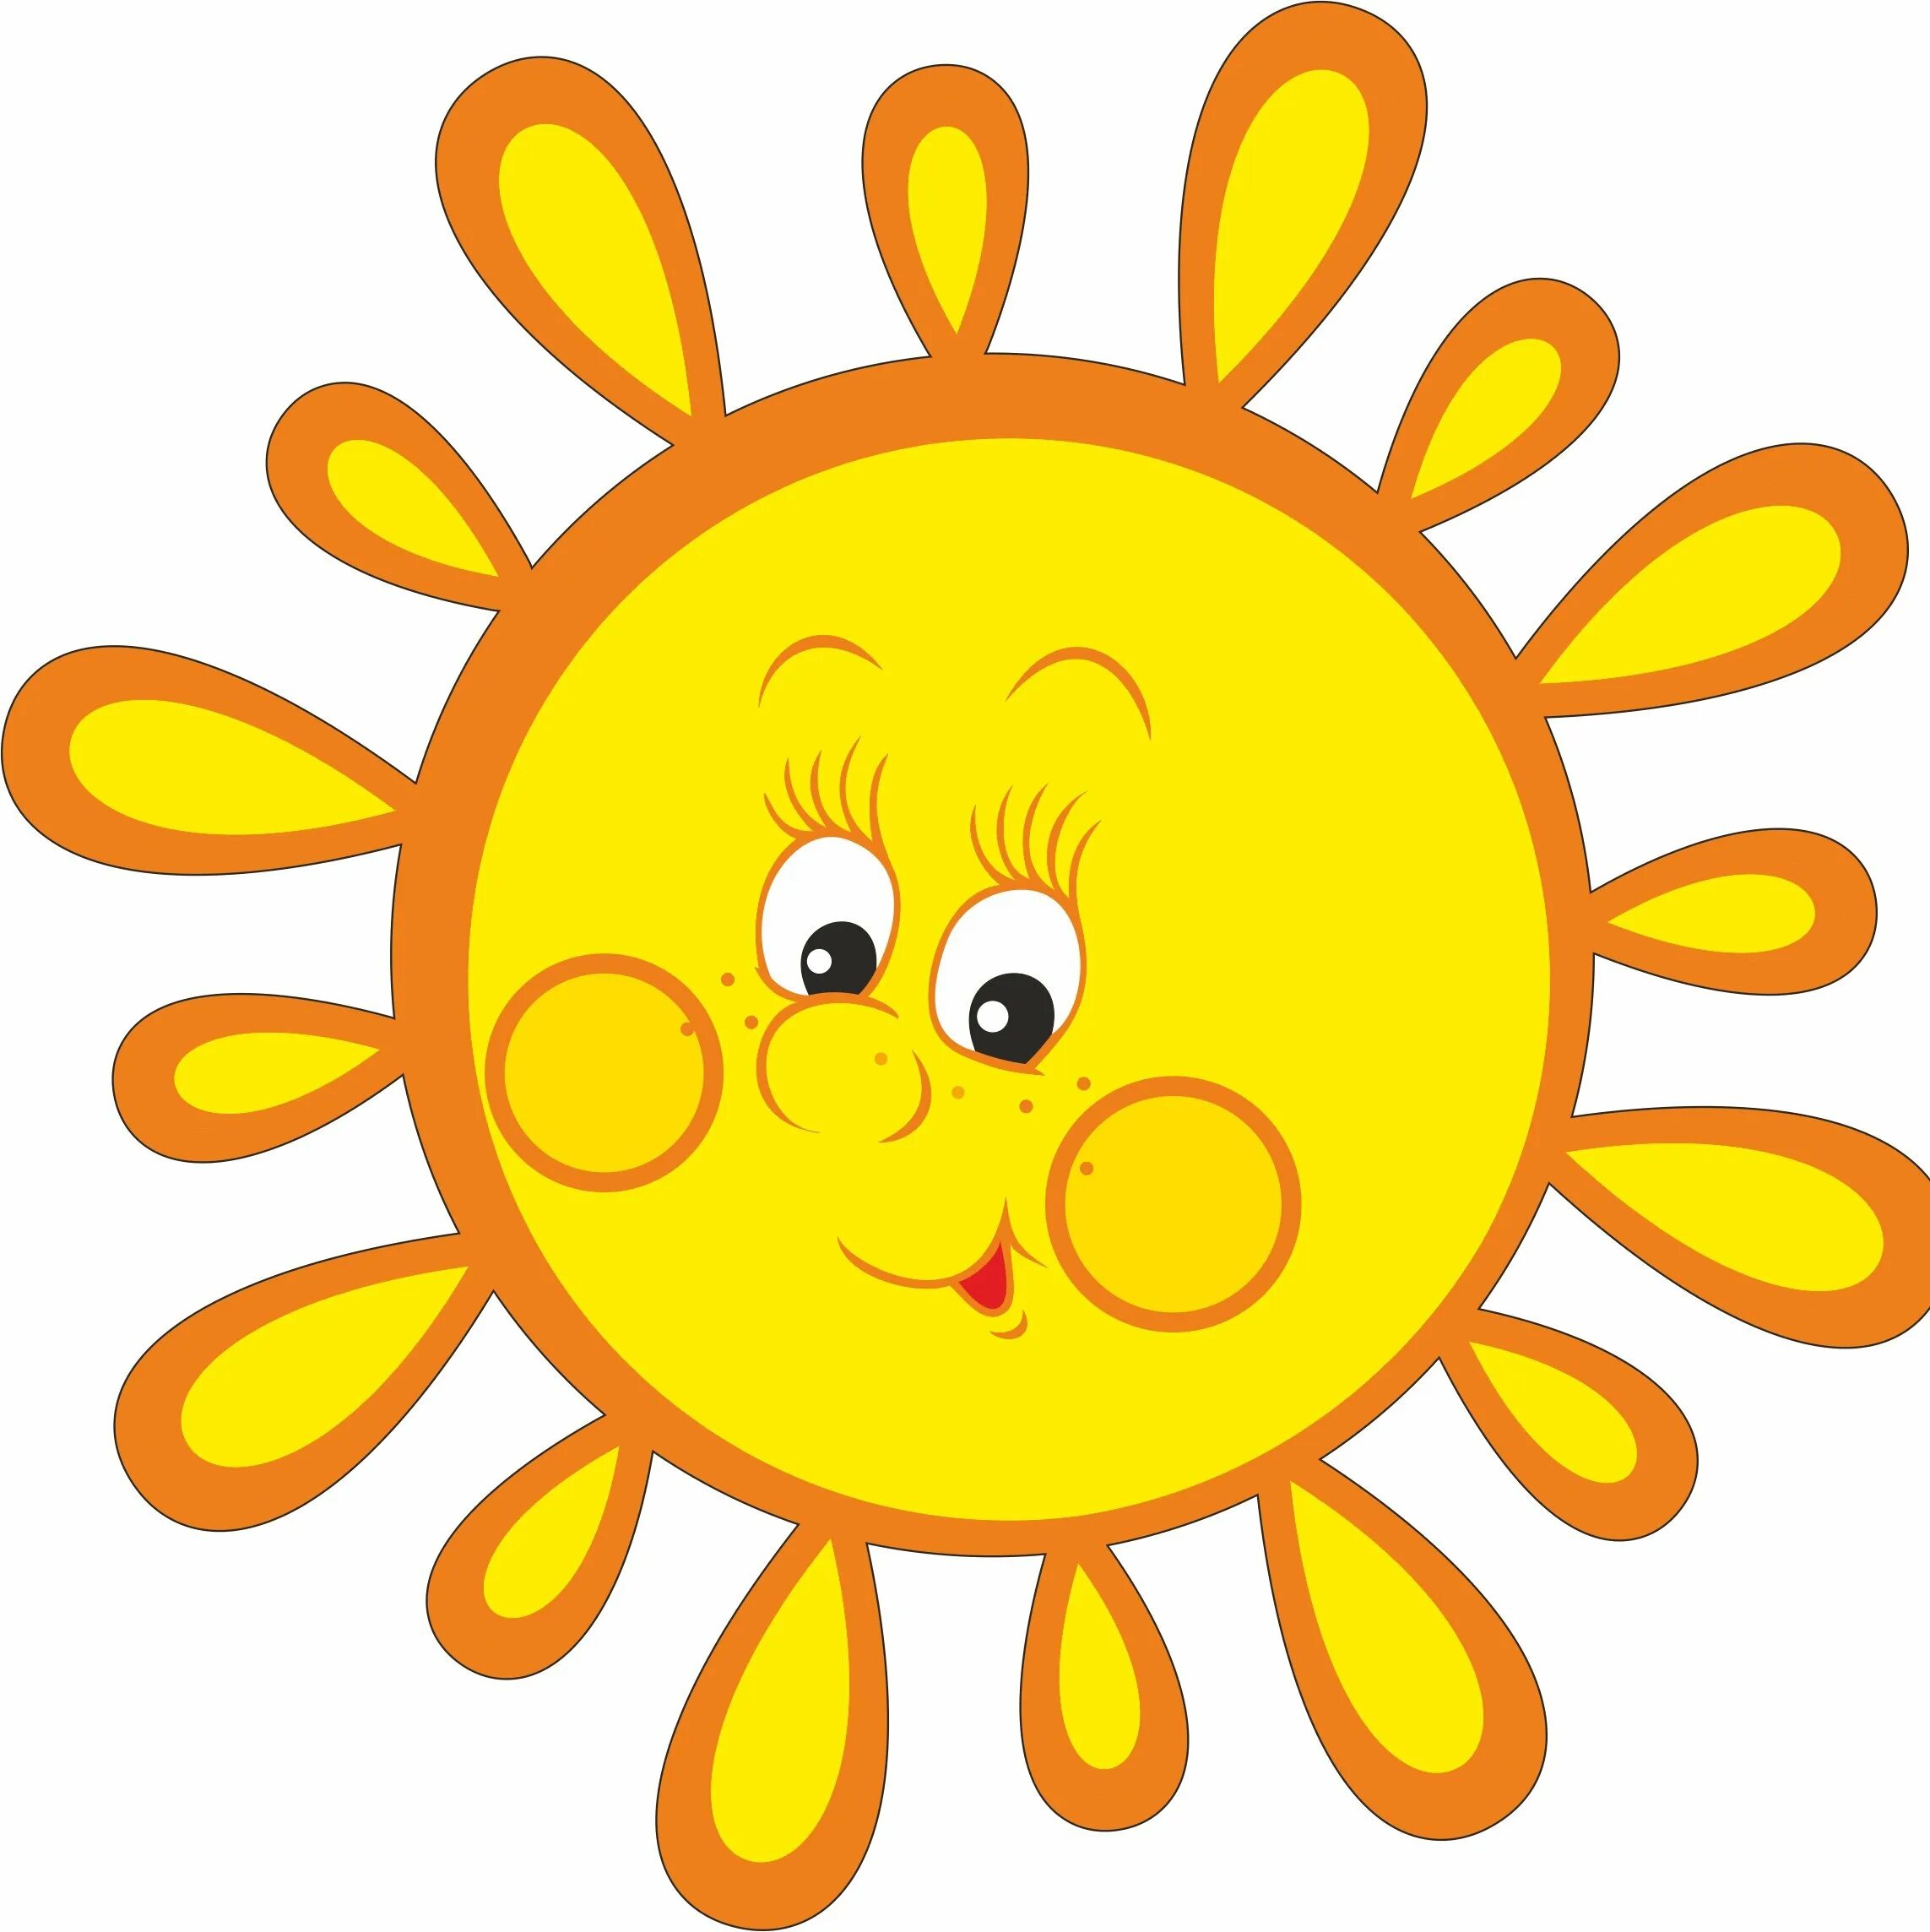 Солнце картинка. Солнышко картинка. Солнышко рисунок. Солнышко для детей. Солнышко картинка для детей.